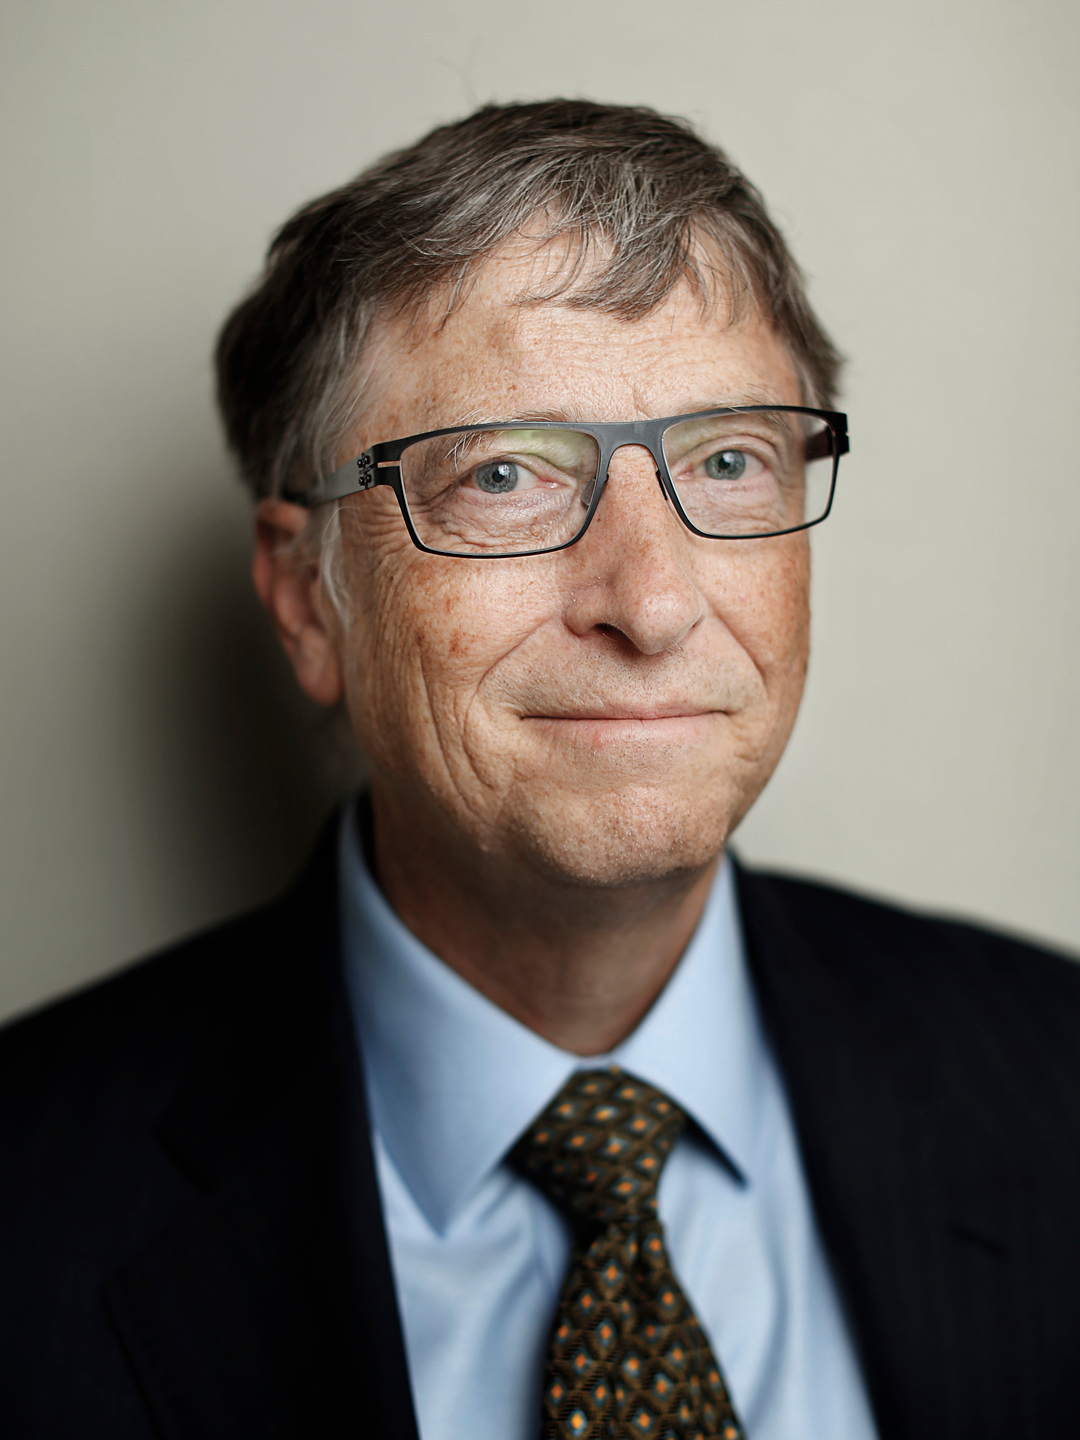 Bill Gates upbringing